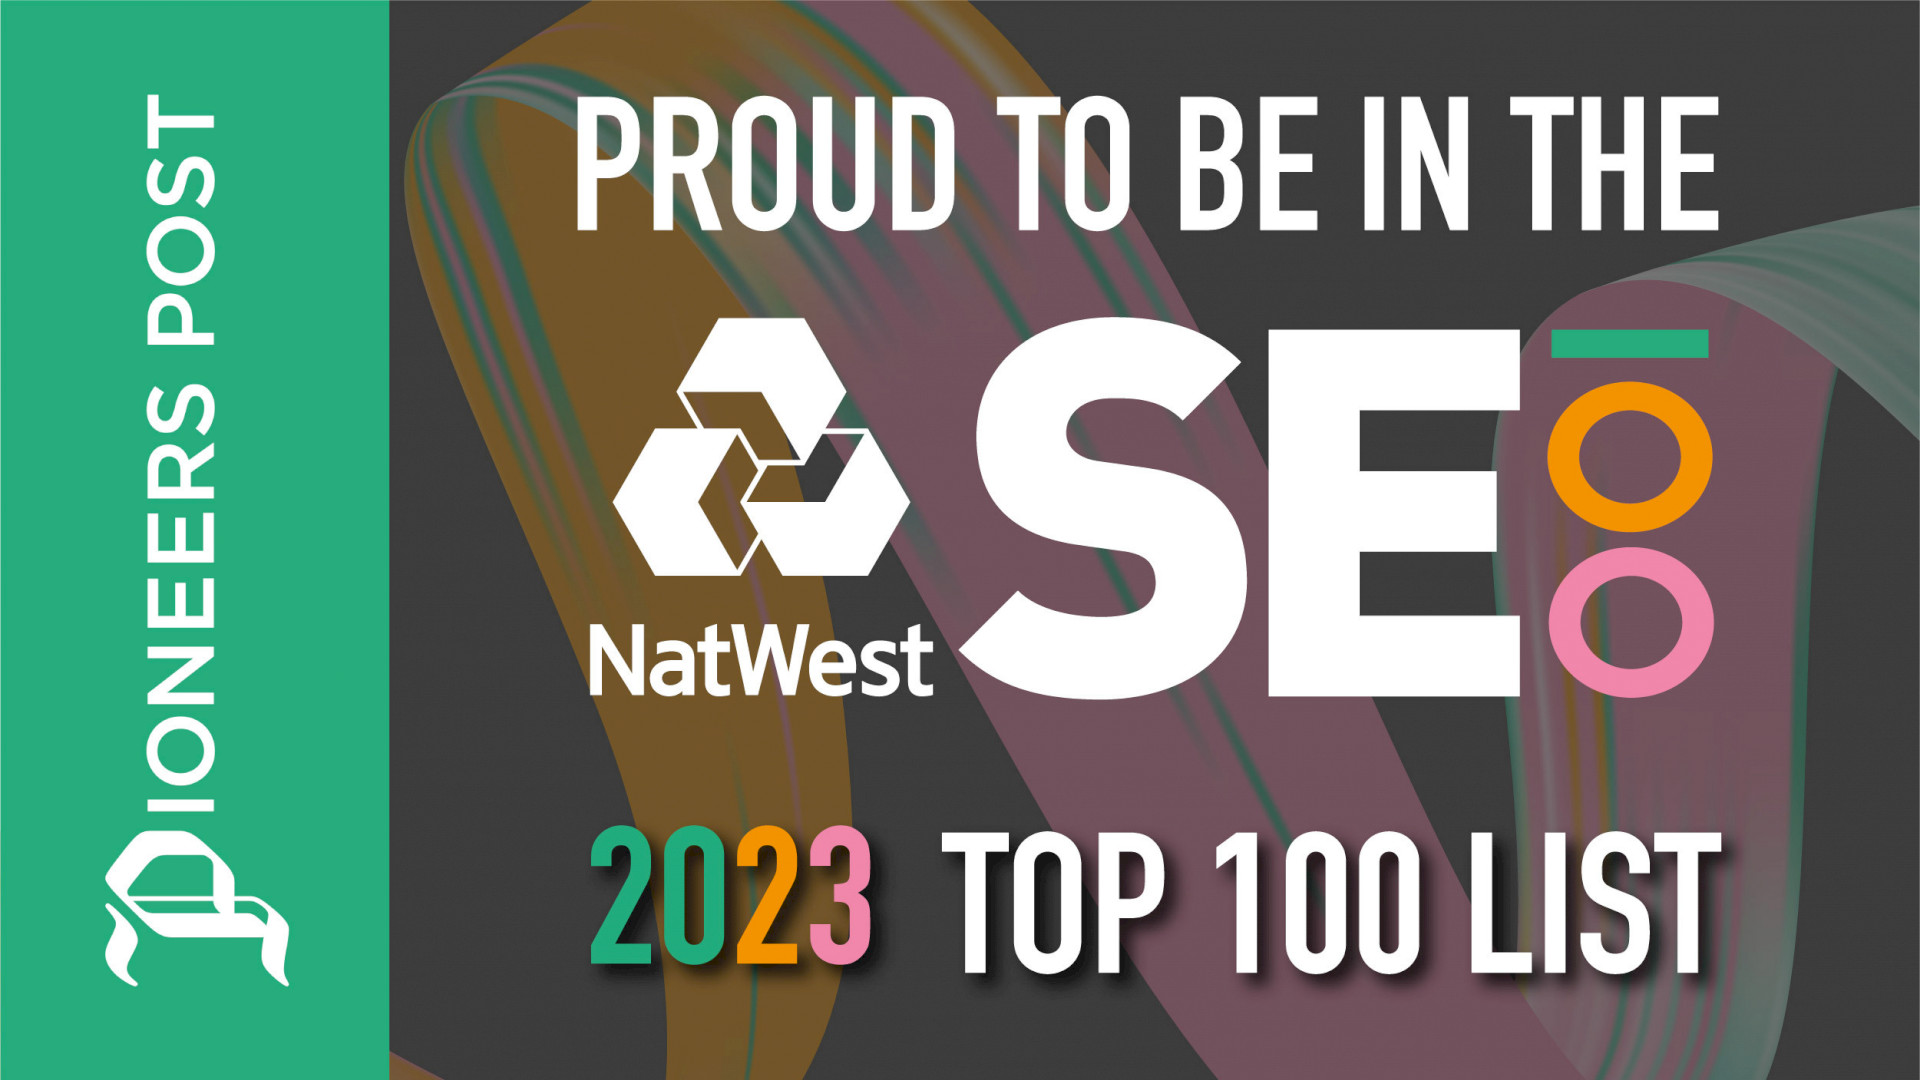 Top 100 UK social enterpirses in the Natwest SE100